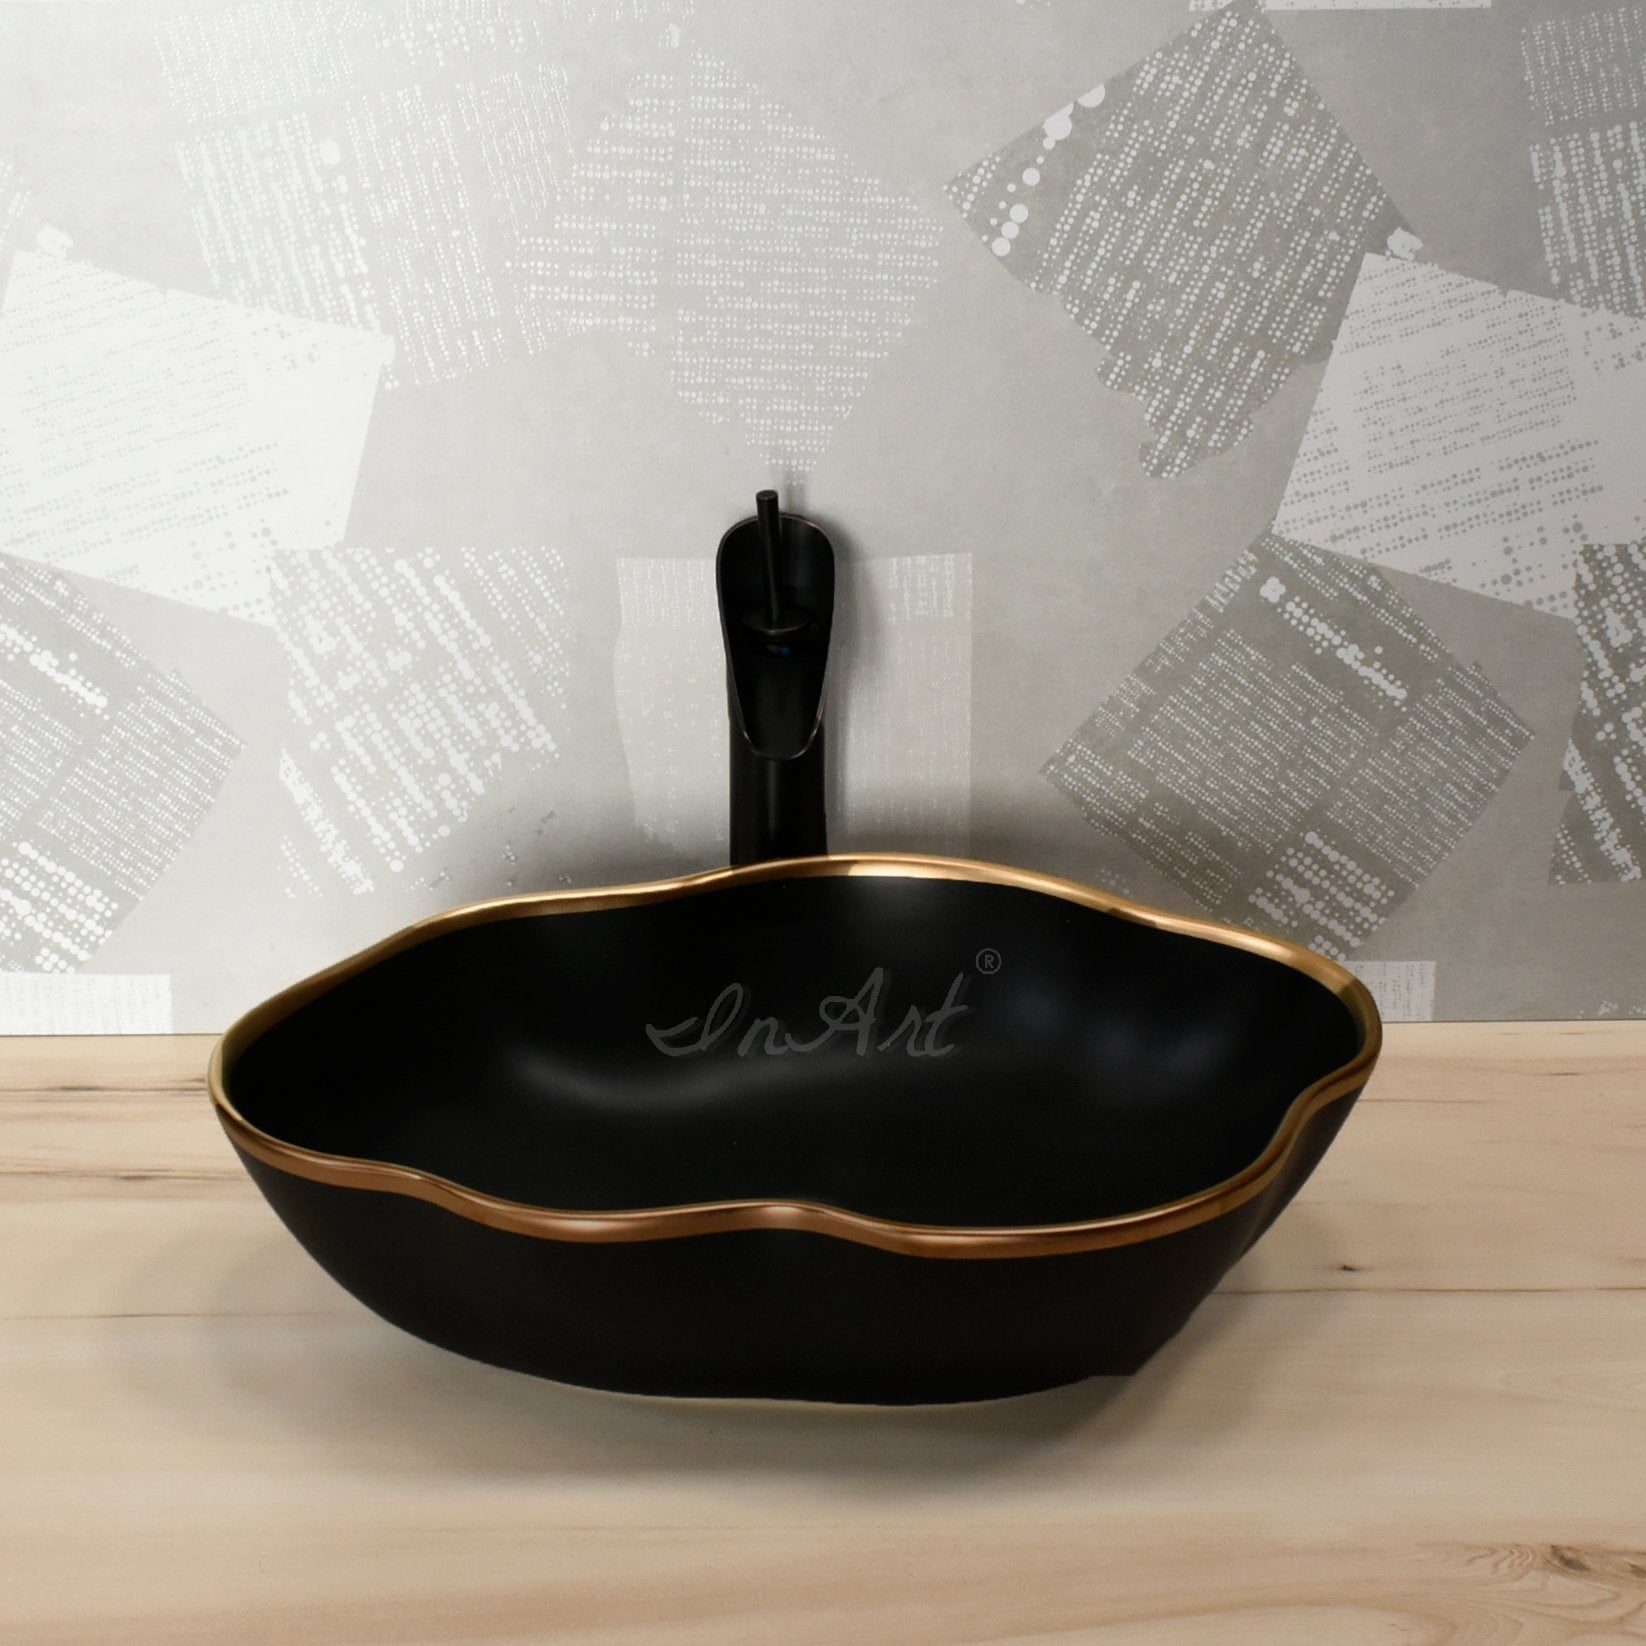 InArt Oval Matt Black Gold Color Bathroom Ceramic Vessel Sink Art Basin 50 x 38 CM - InArt-Studio-USA